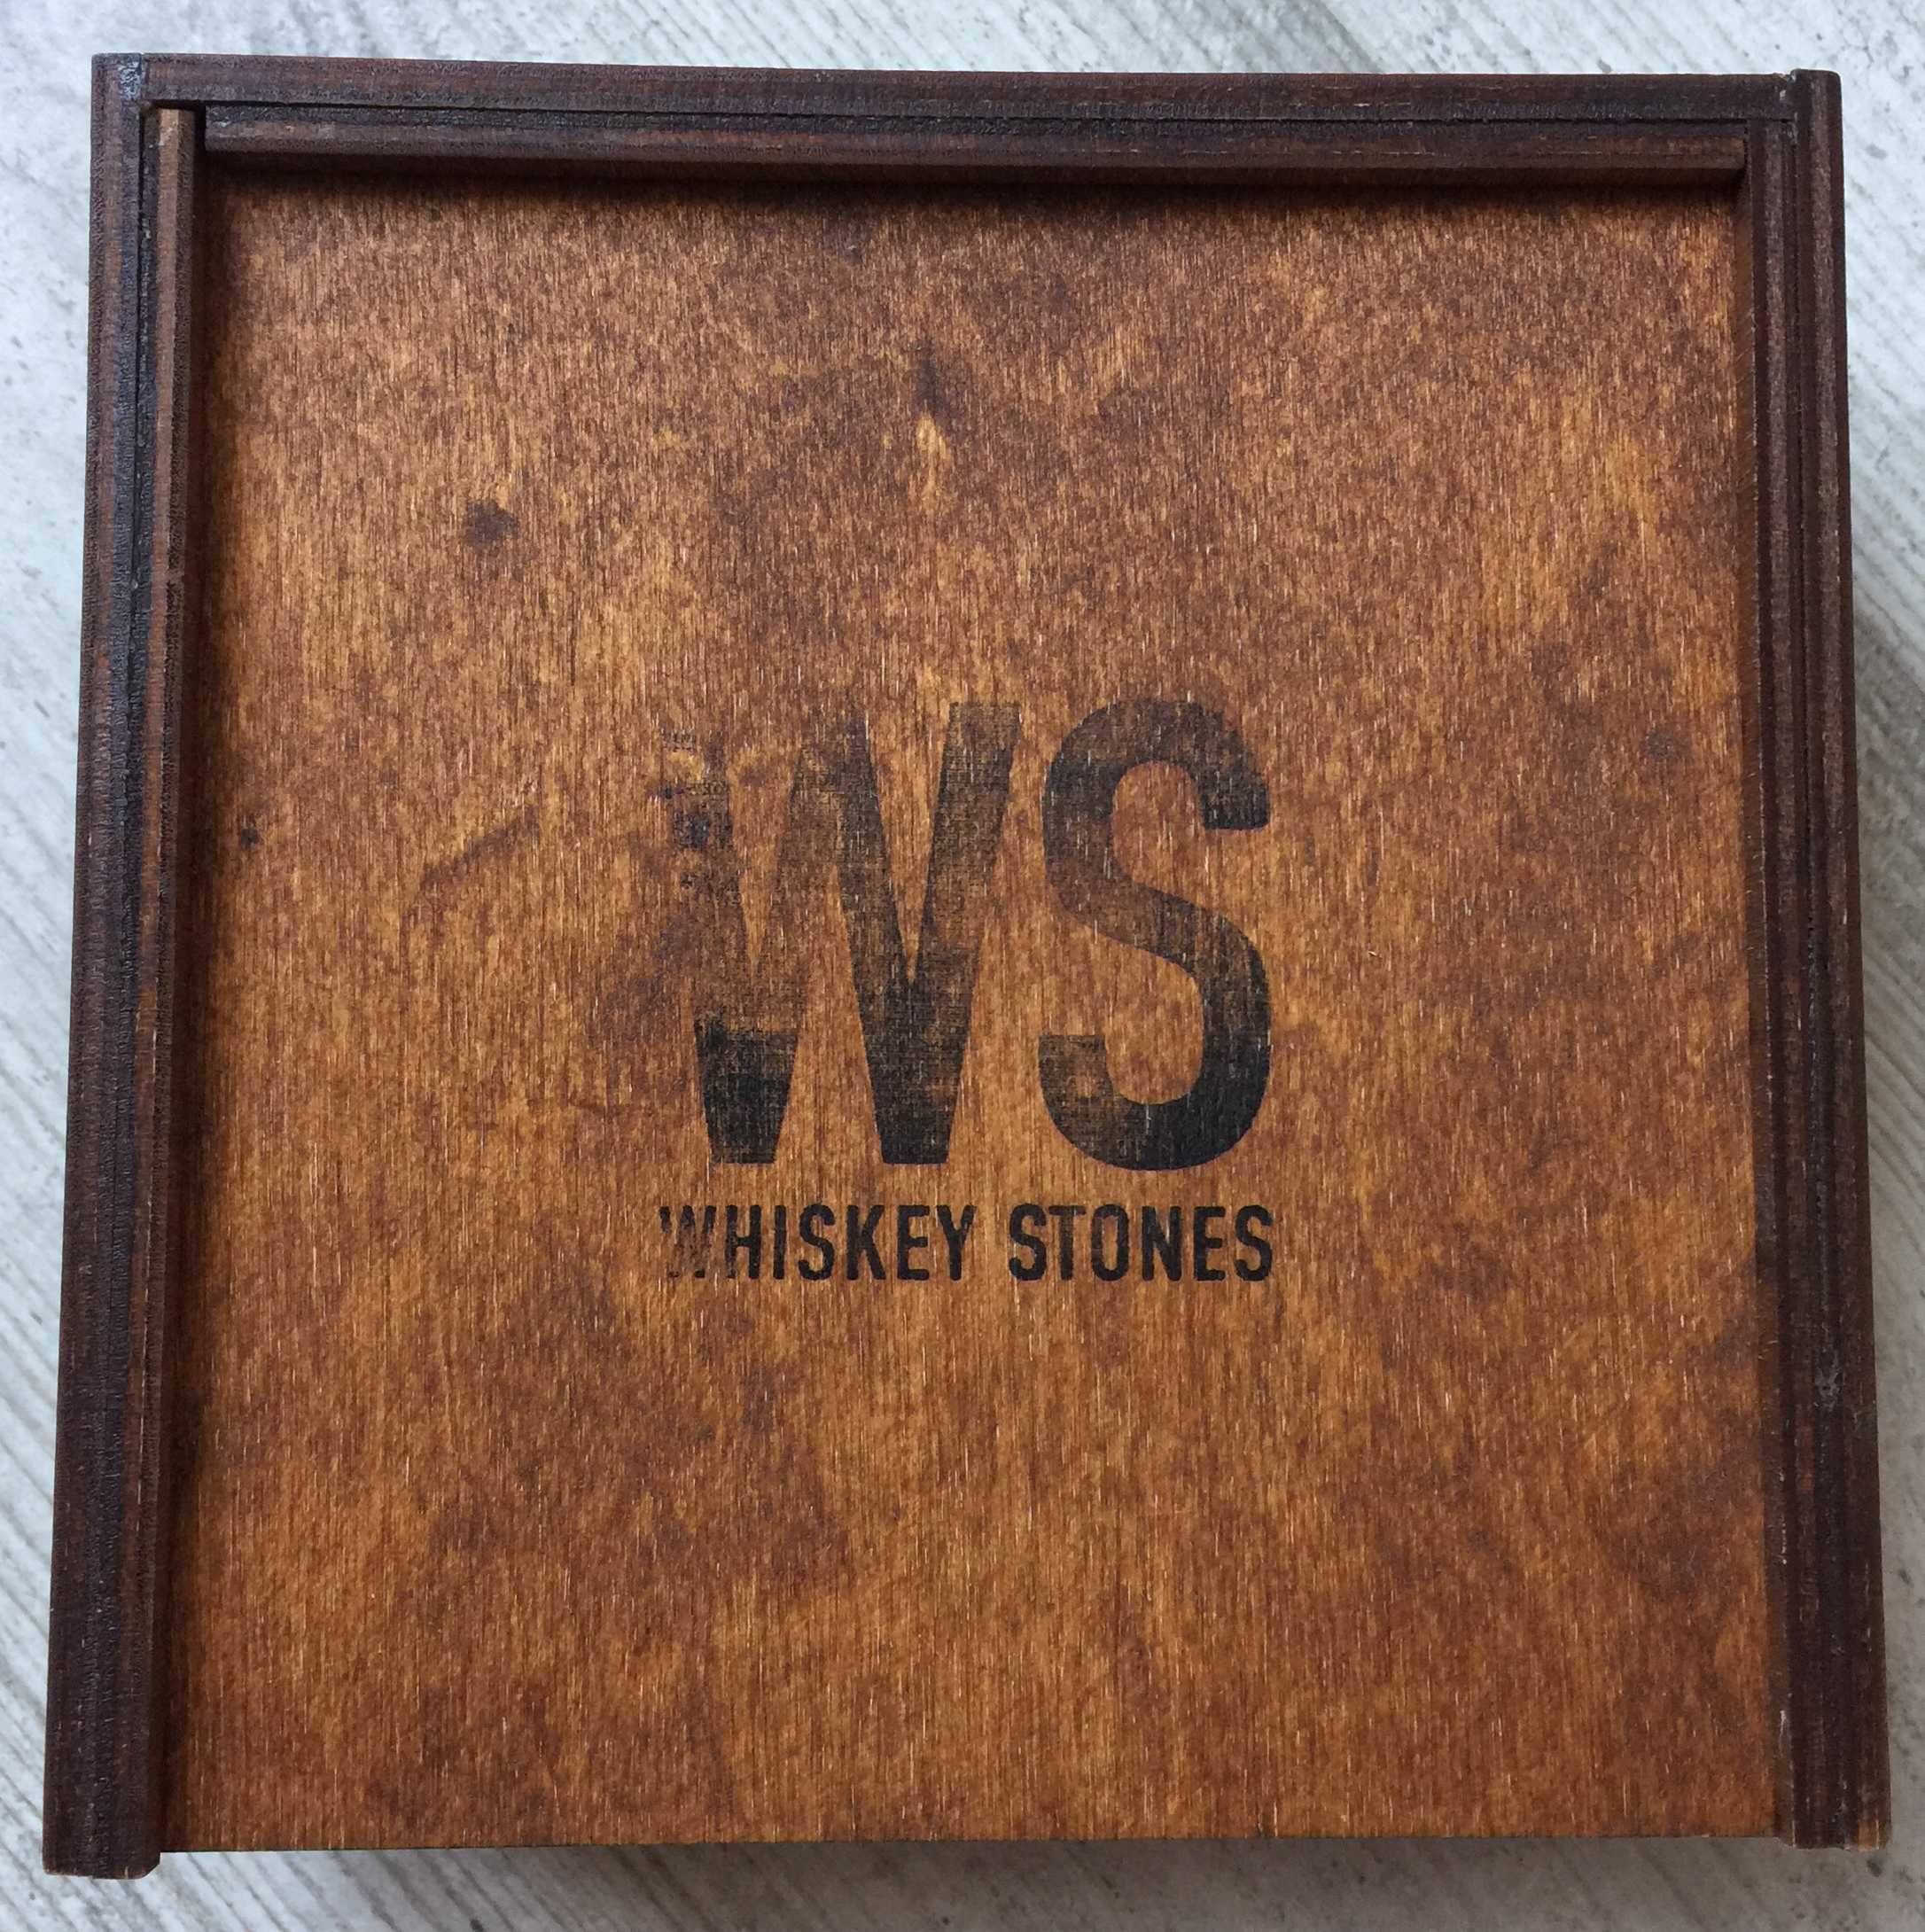 Камни для Виски Whiskey Stones WS